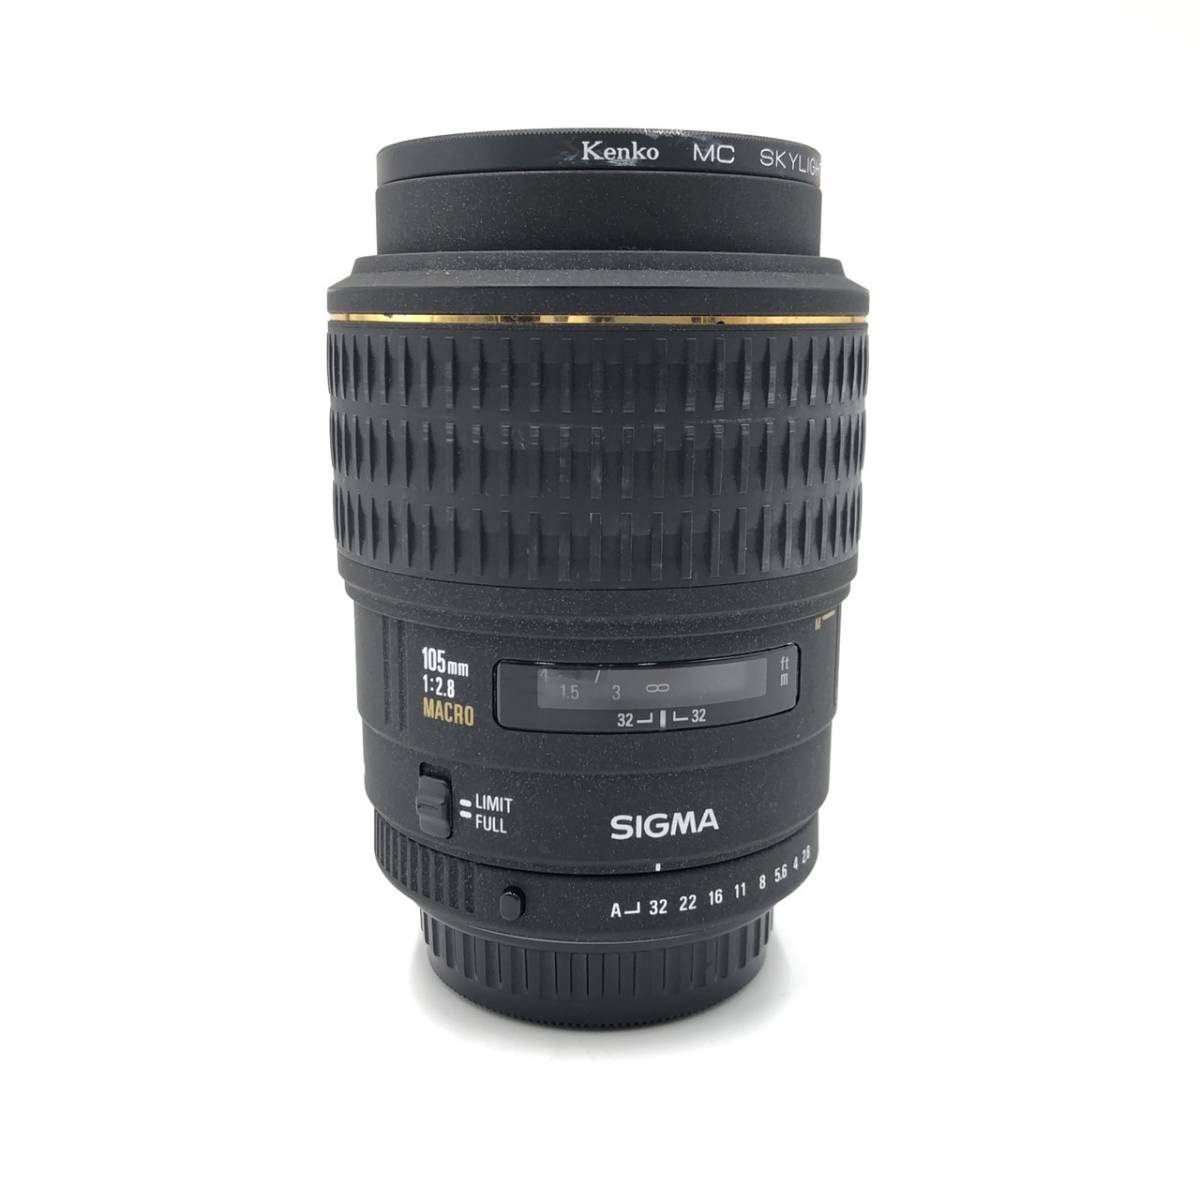 SIGMA Sigma EX 105mm 1:2.8 MACRO Canon camera lens 2-2